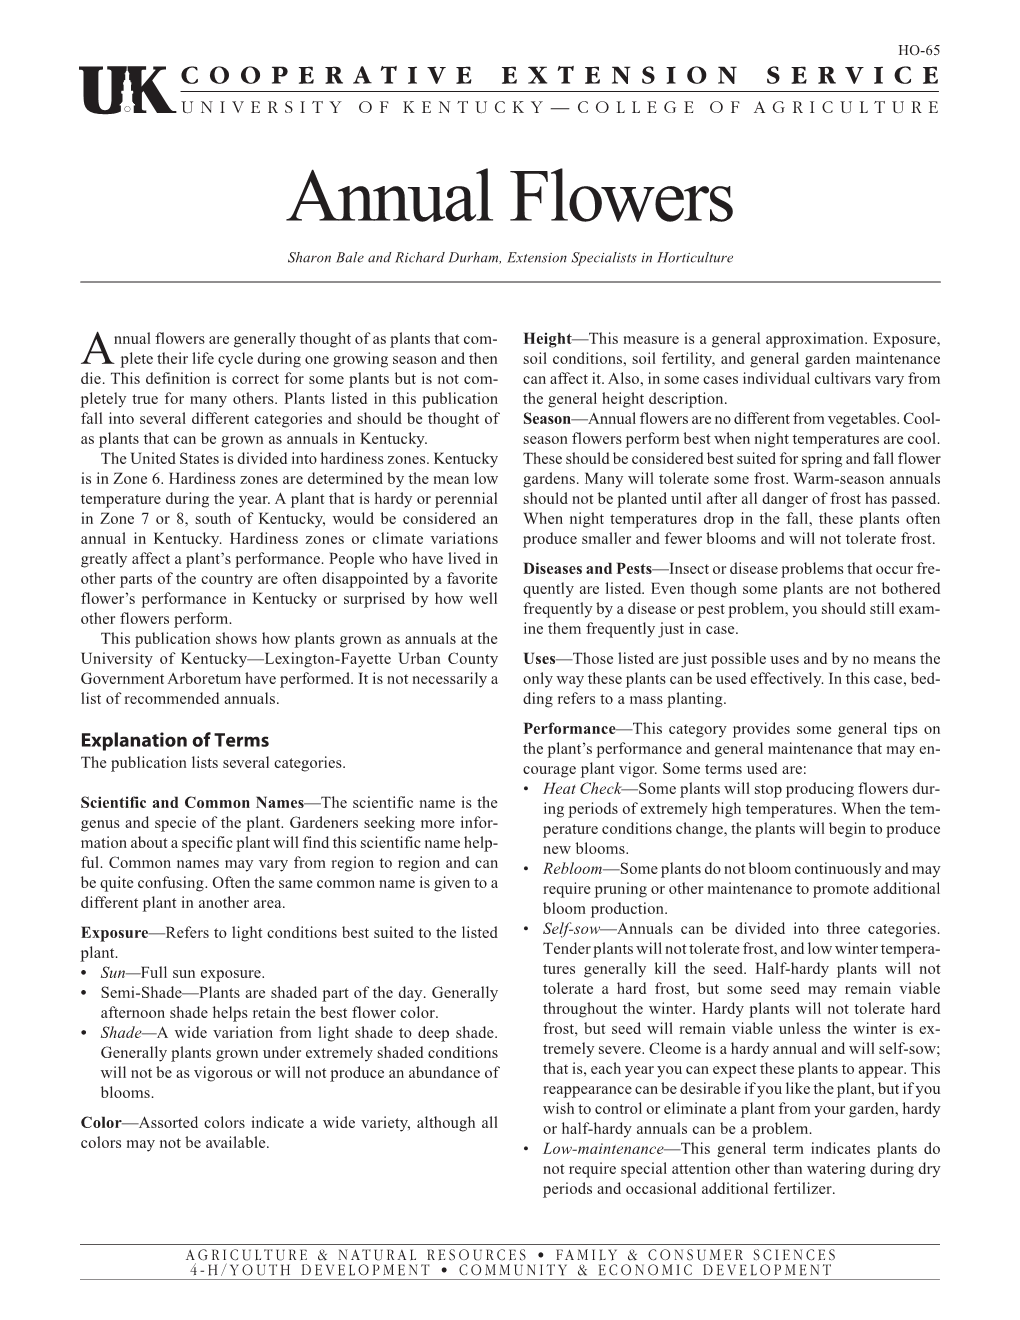 Annual Flowers HO-65